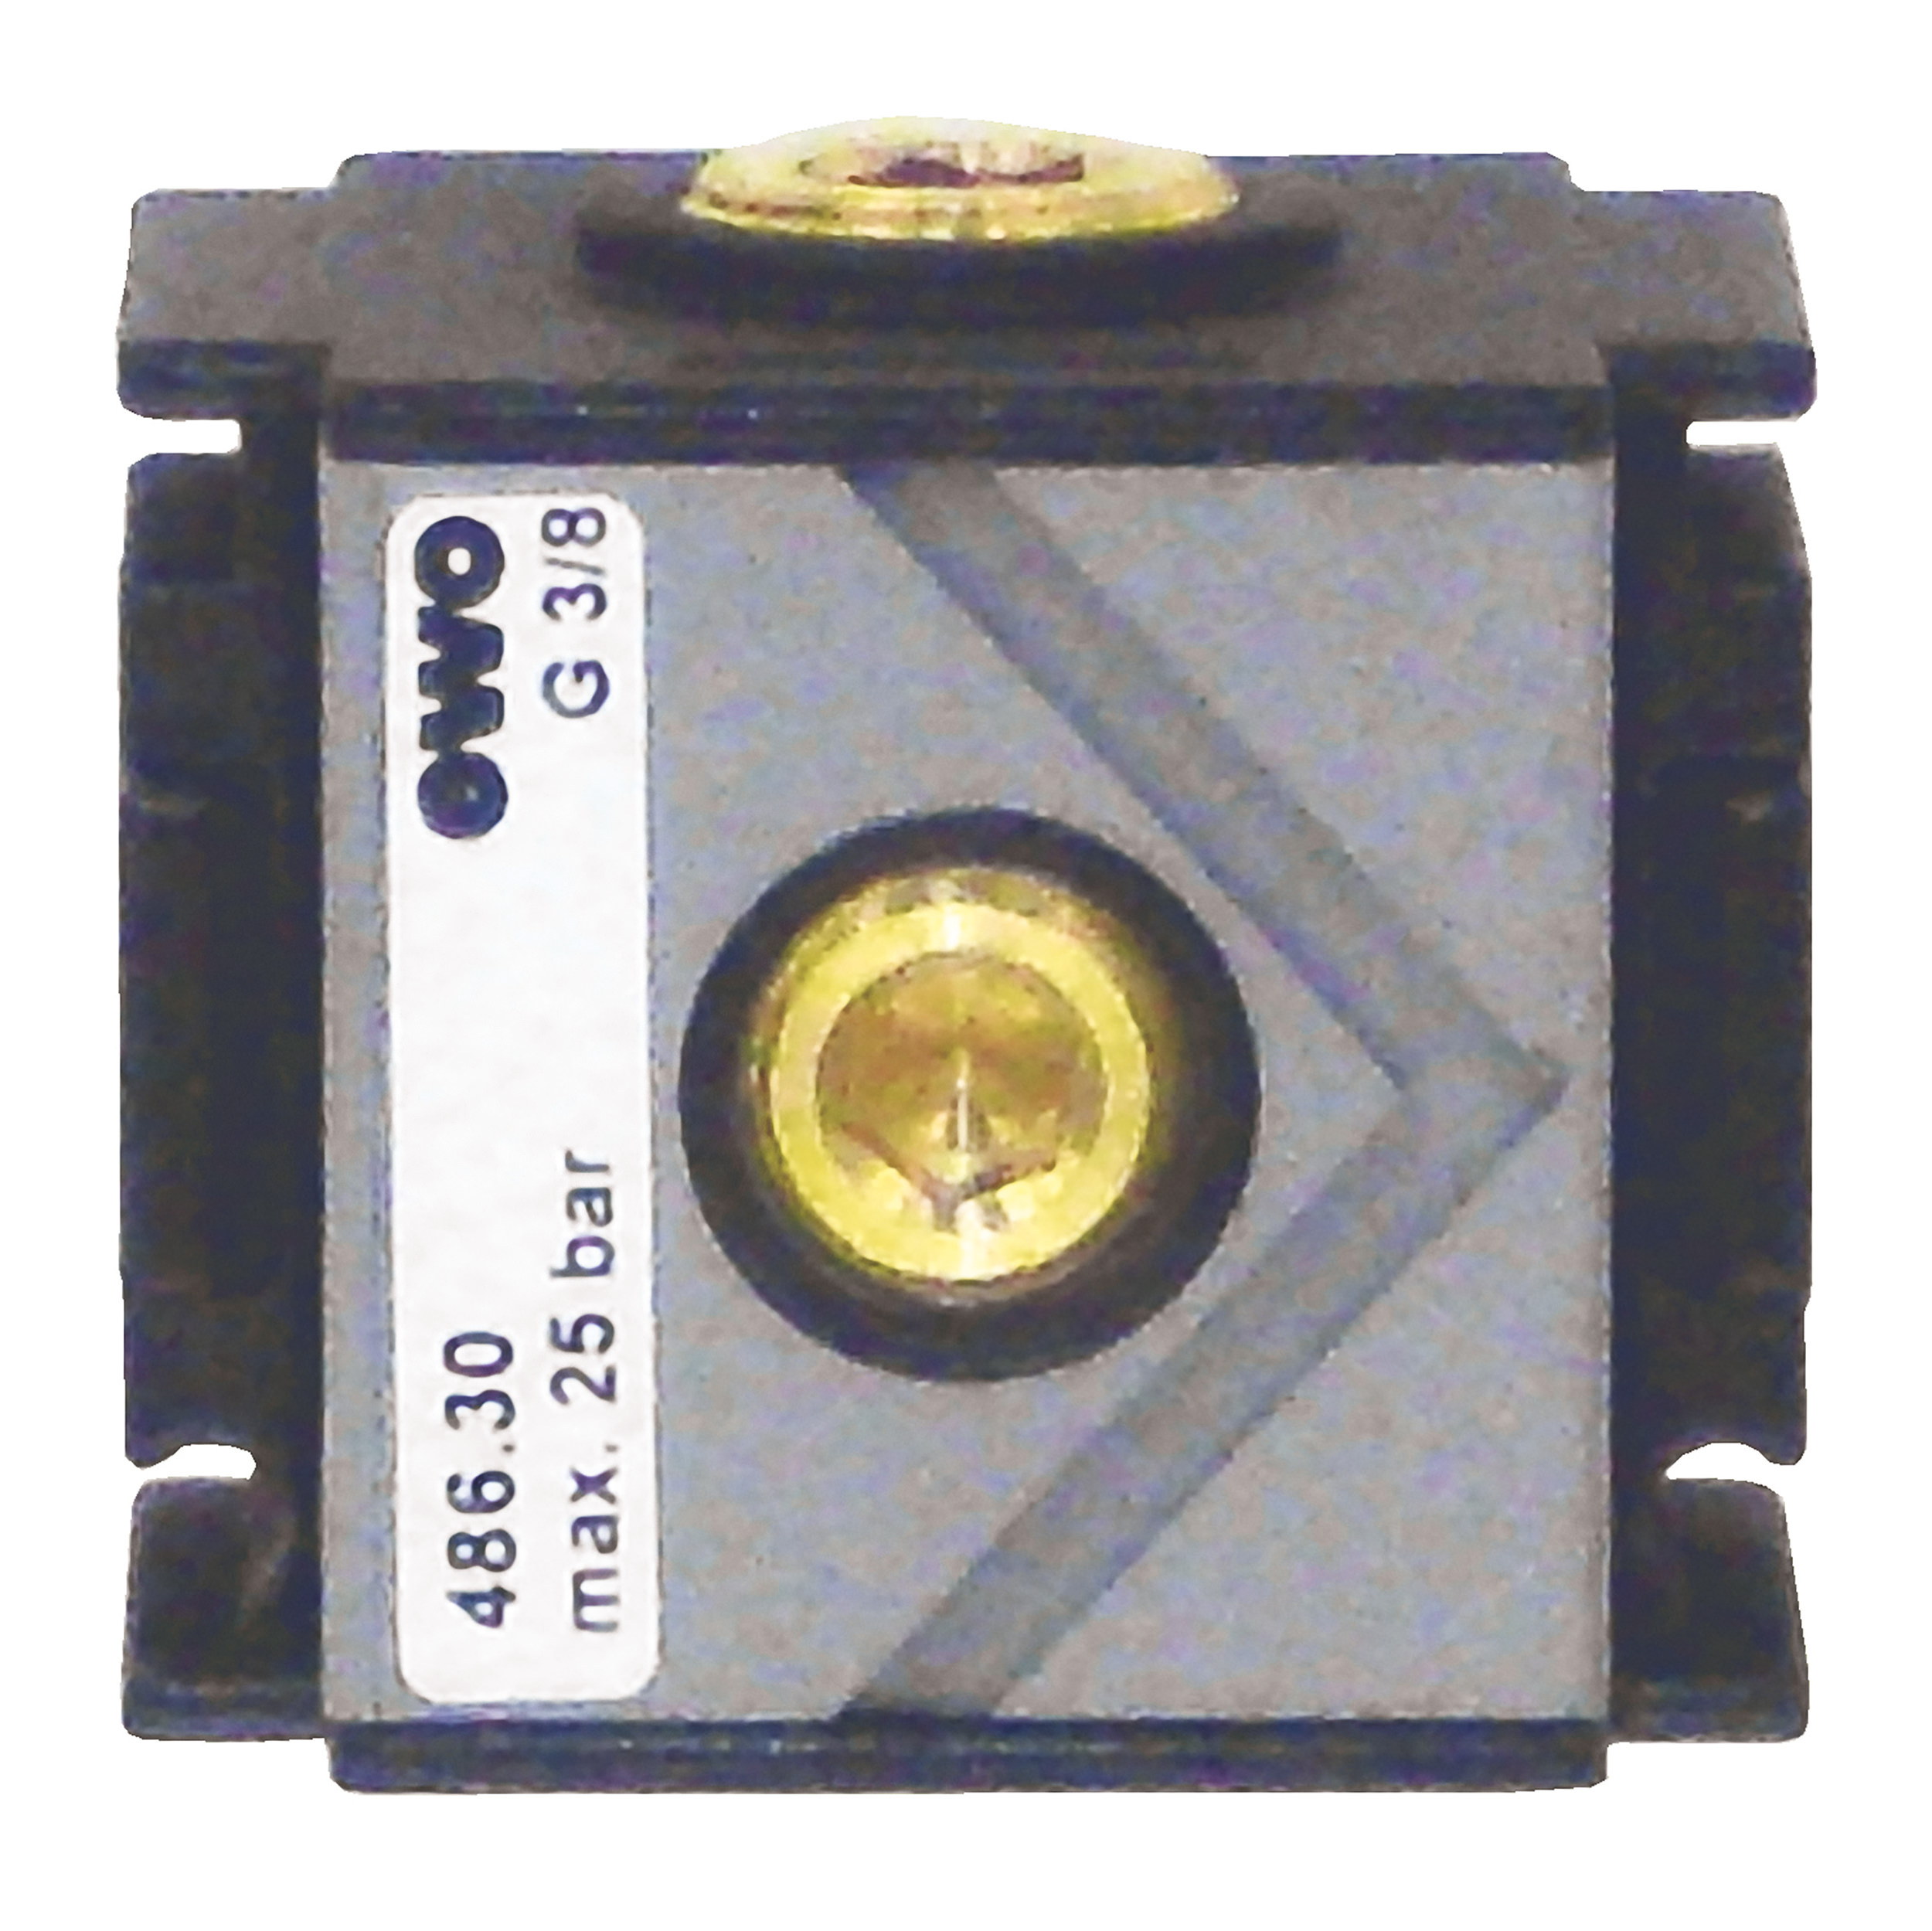 Distributor 486 variobloc, G⅜, BG 30, outlets: top/bottom: G⅜, front/back: G¼; without non-return valve, QN: 5,000 Nl/min